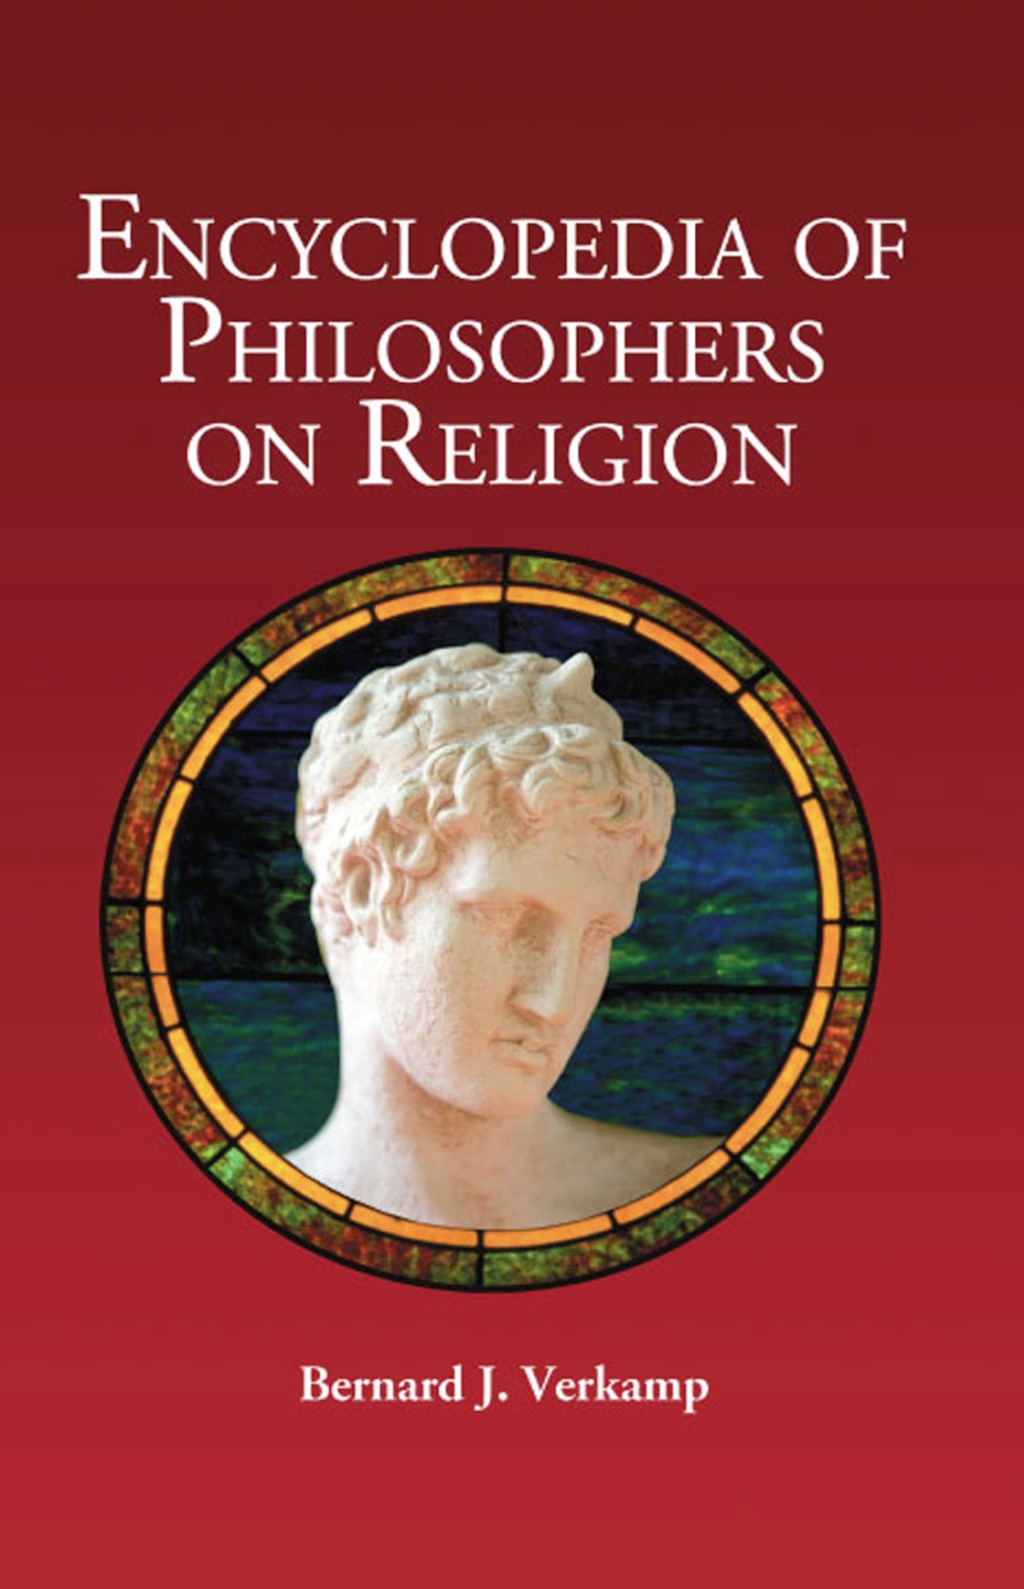 Encyclopedia of Philosophers on Religion (eBook) - Bernard J. Verkamp